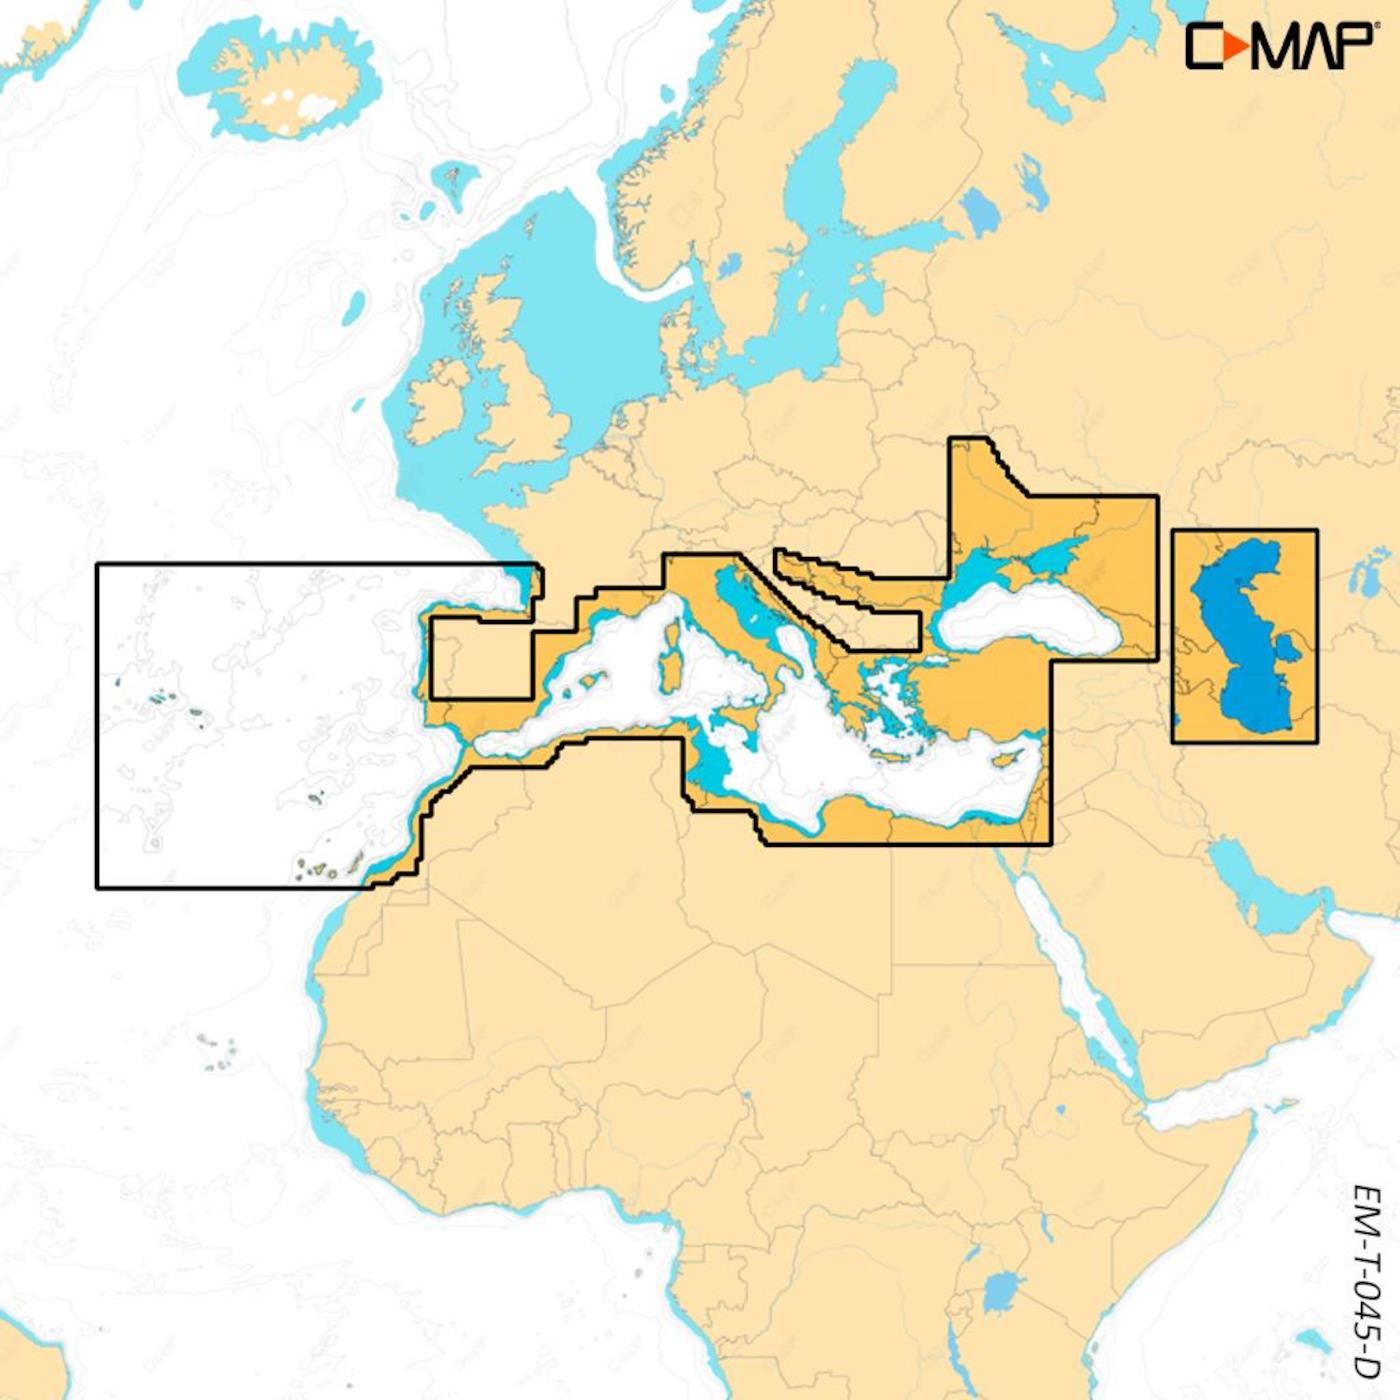 C-MAP Discover X Middellandse Zee, Zuid-Europese kusten EM-T-045